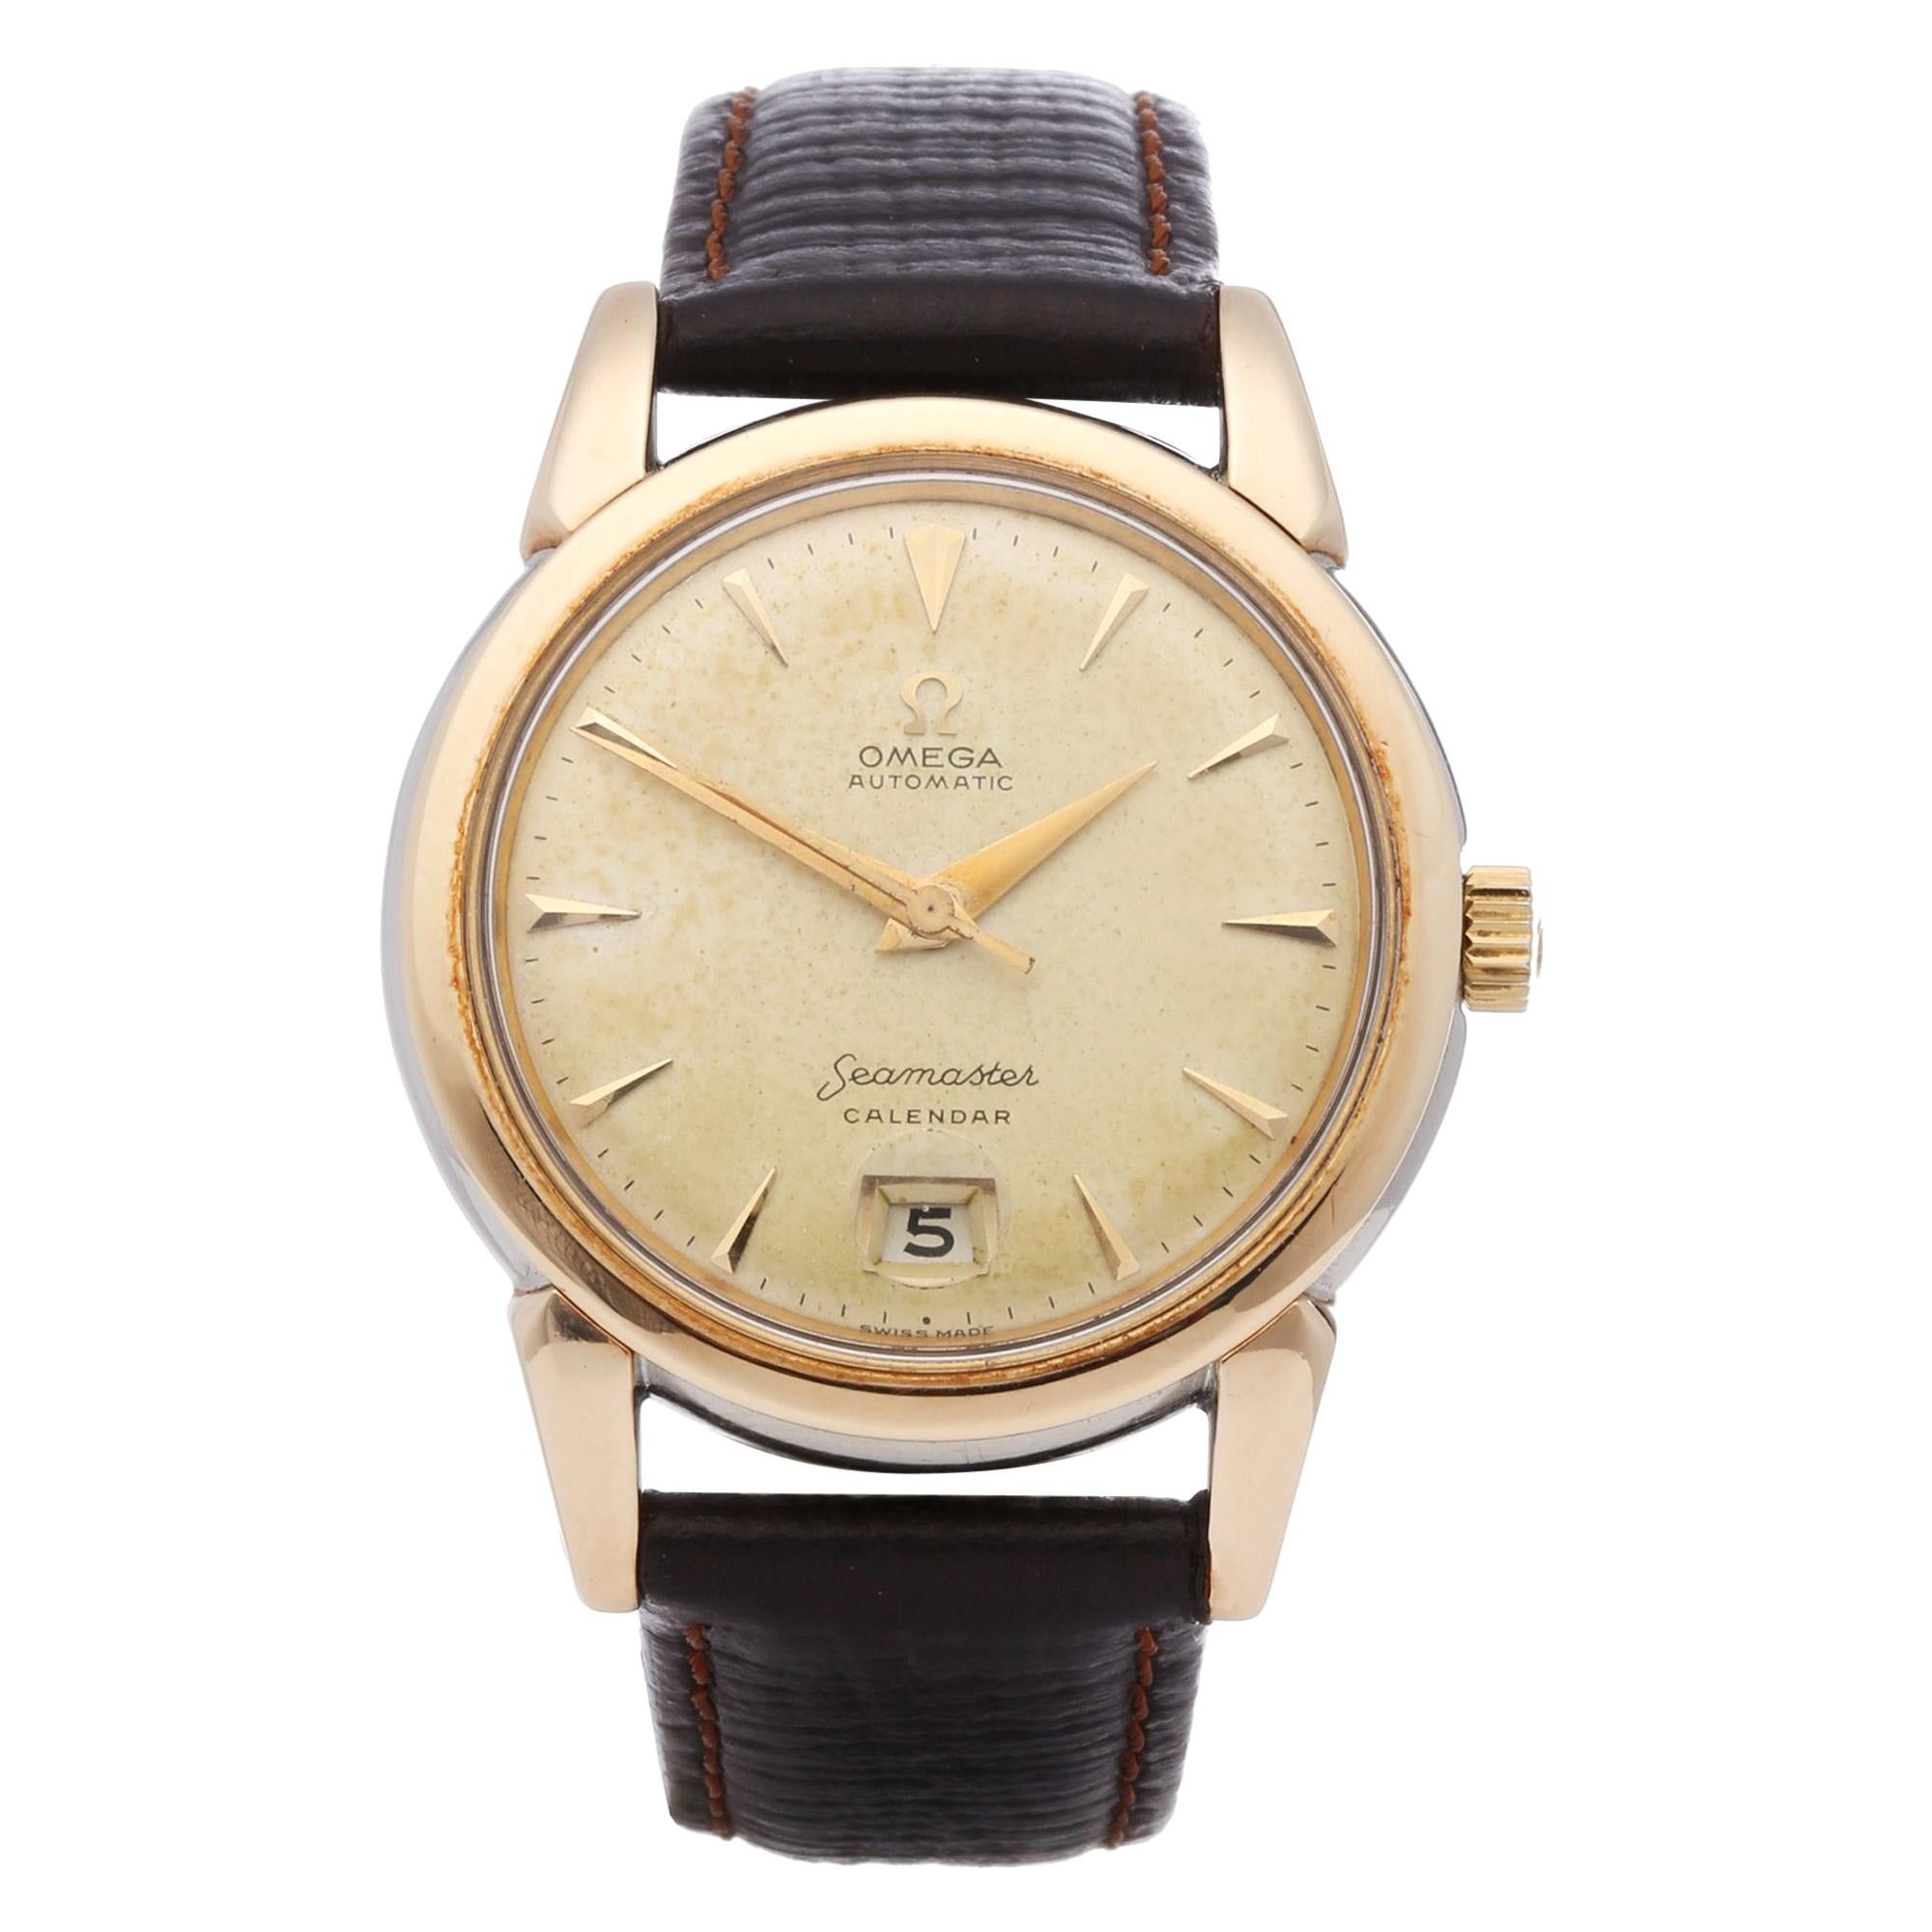 Omega Seamaster Calendar 1342 Men's Gold-Plated Watch